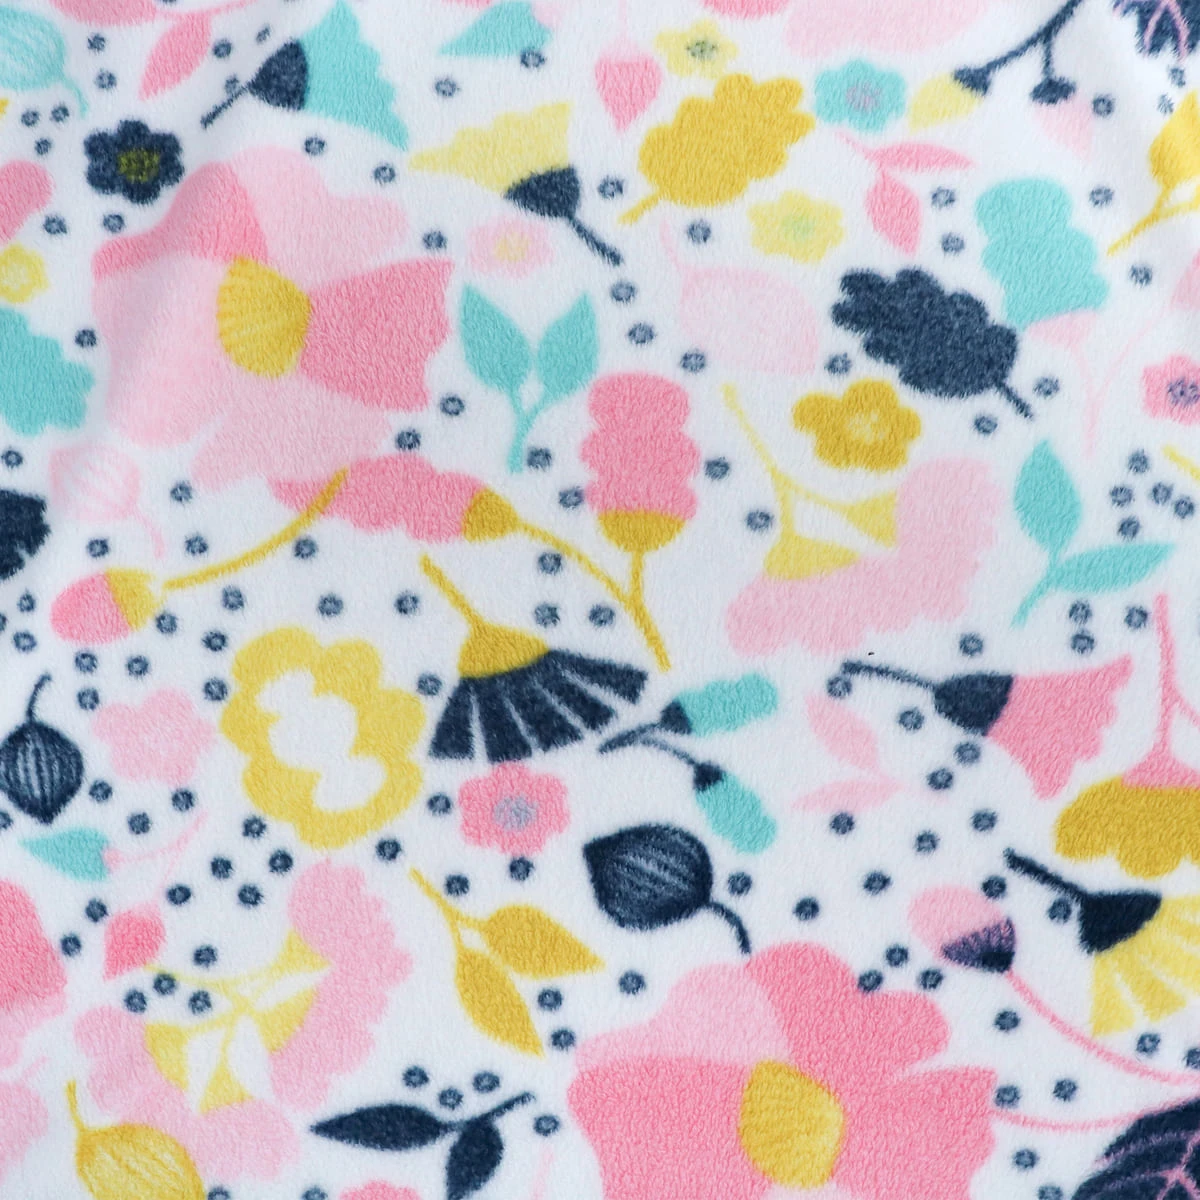 Colorful Flower Printed Plush Blanket